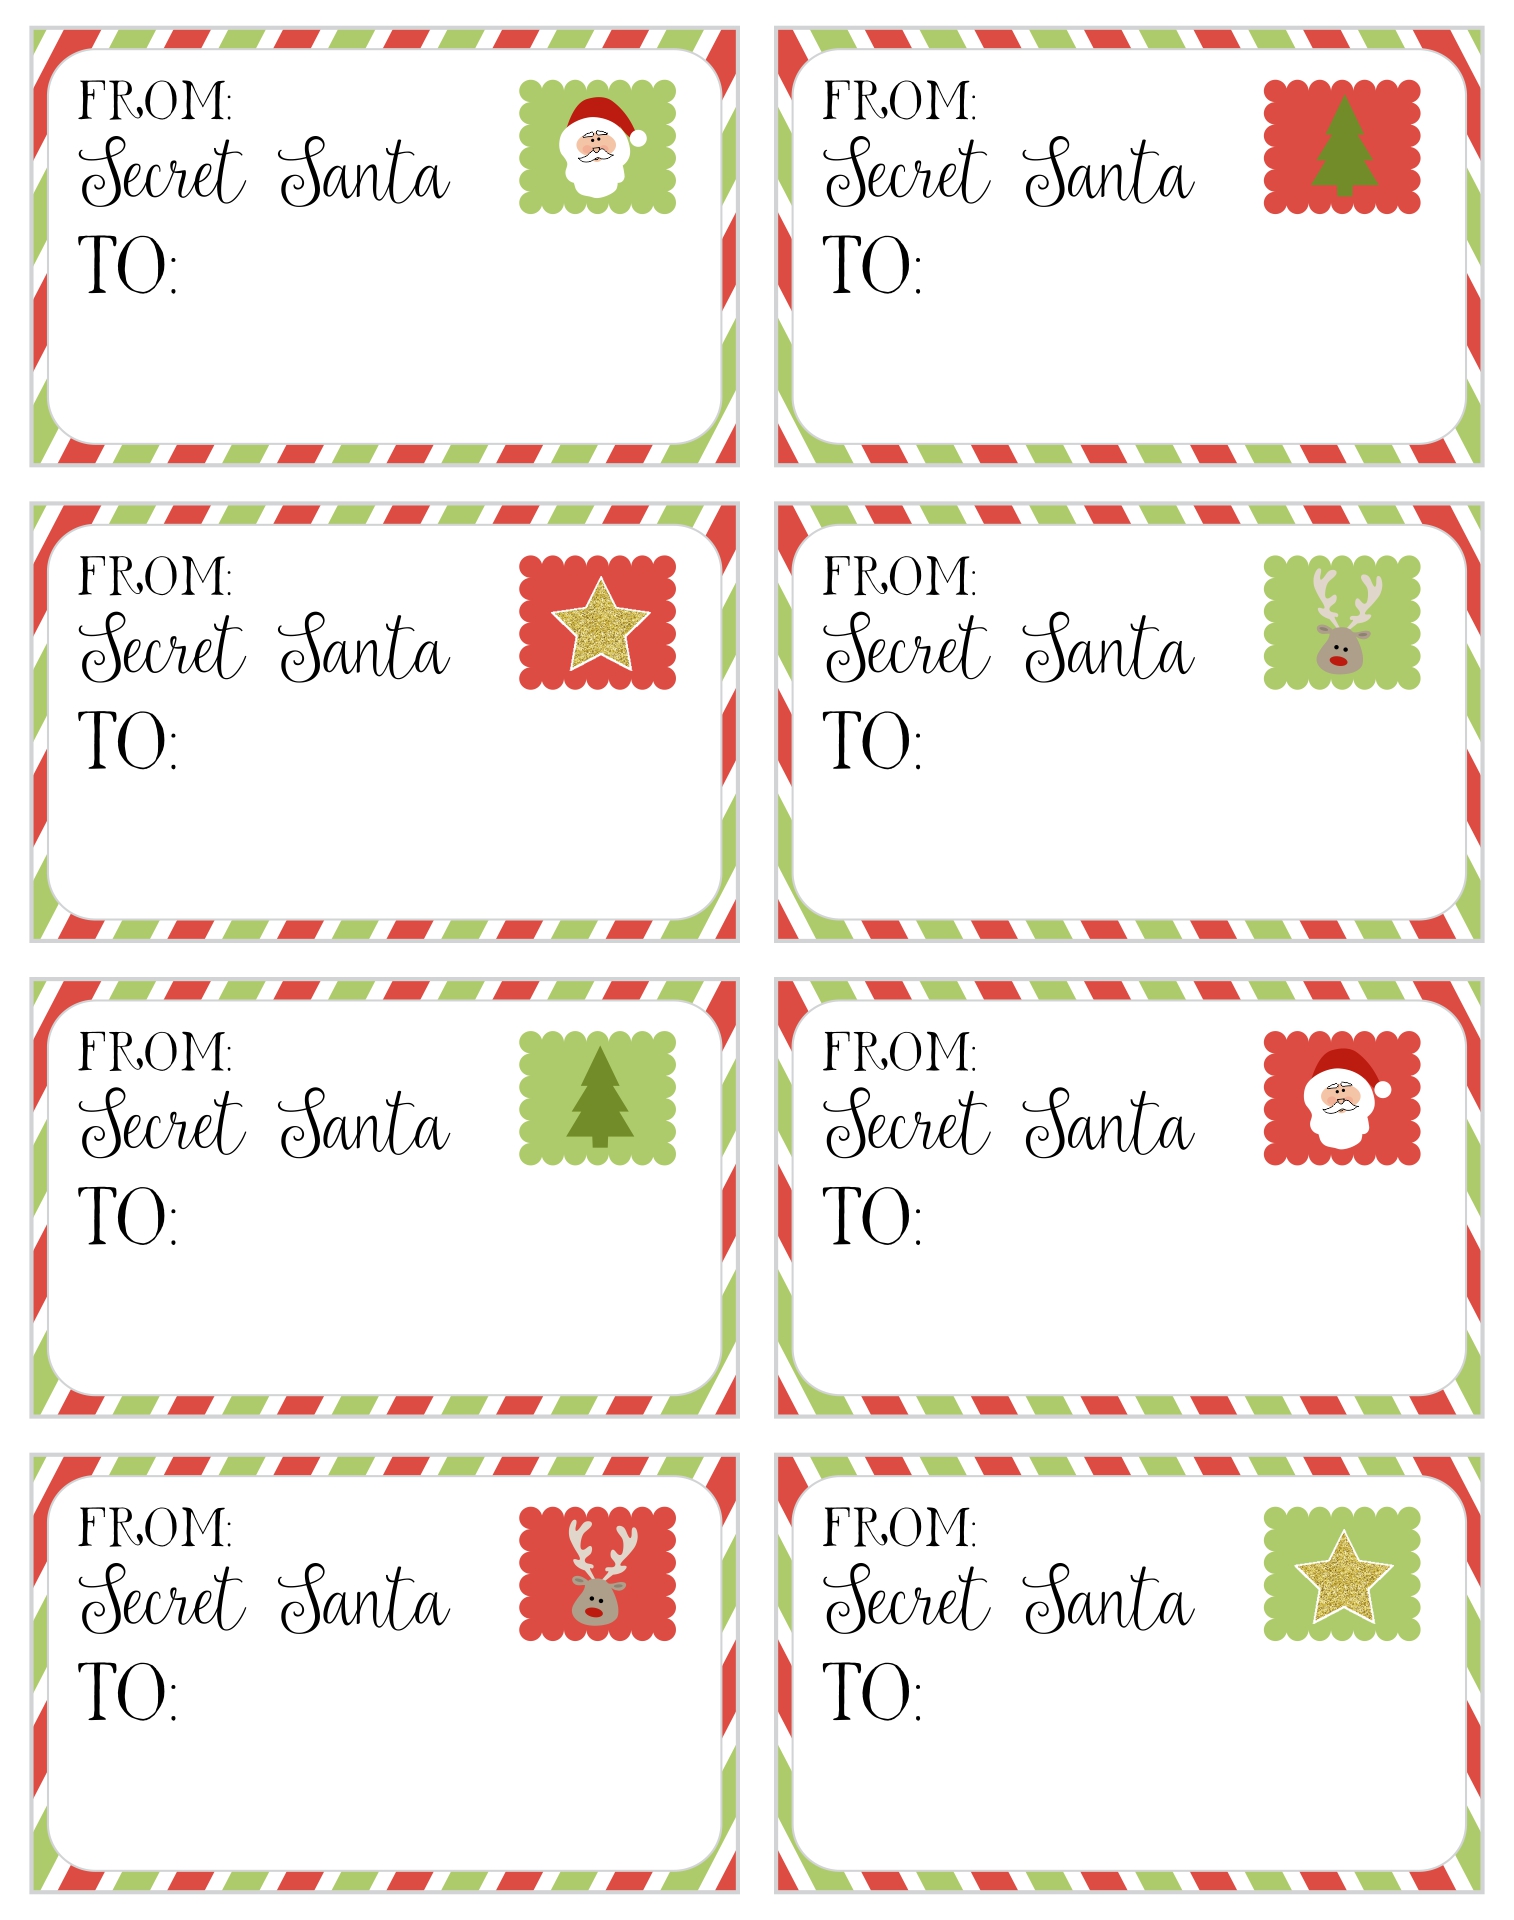 Printable Secret Santa Cards_21888